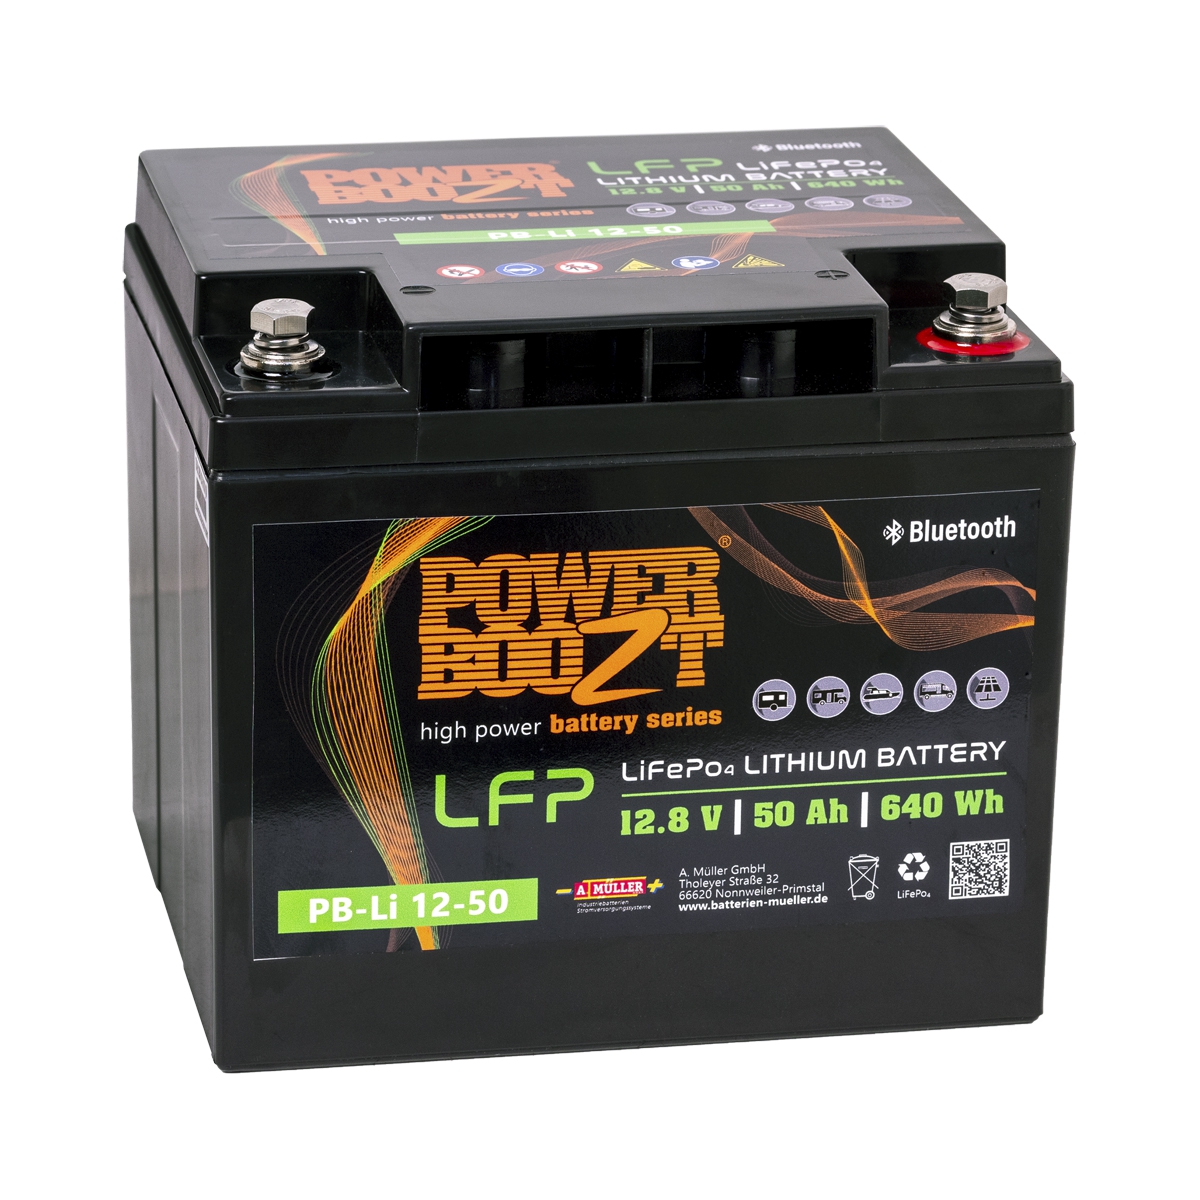 POWERBOOZT Lithium Batterie PB-Li 12-50 104064